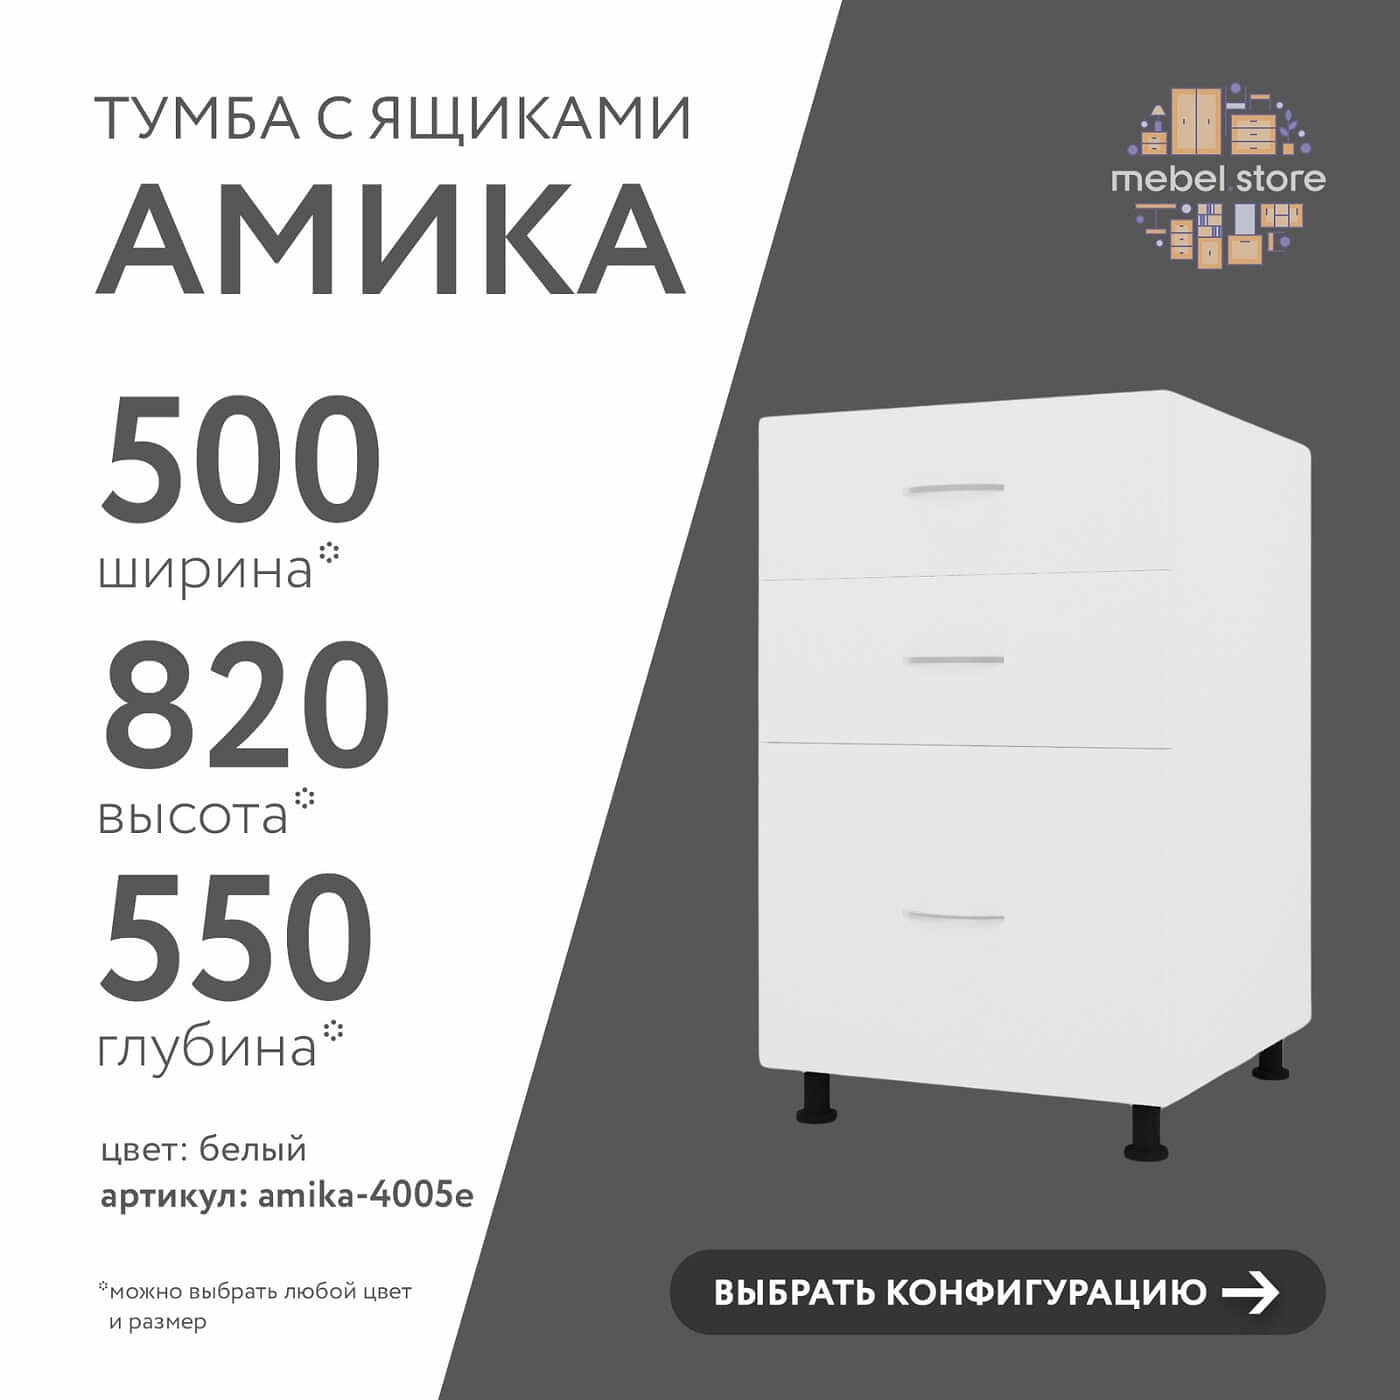 Тумба напольная Амика-4005e минимализм для кухни - фото 1 large